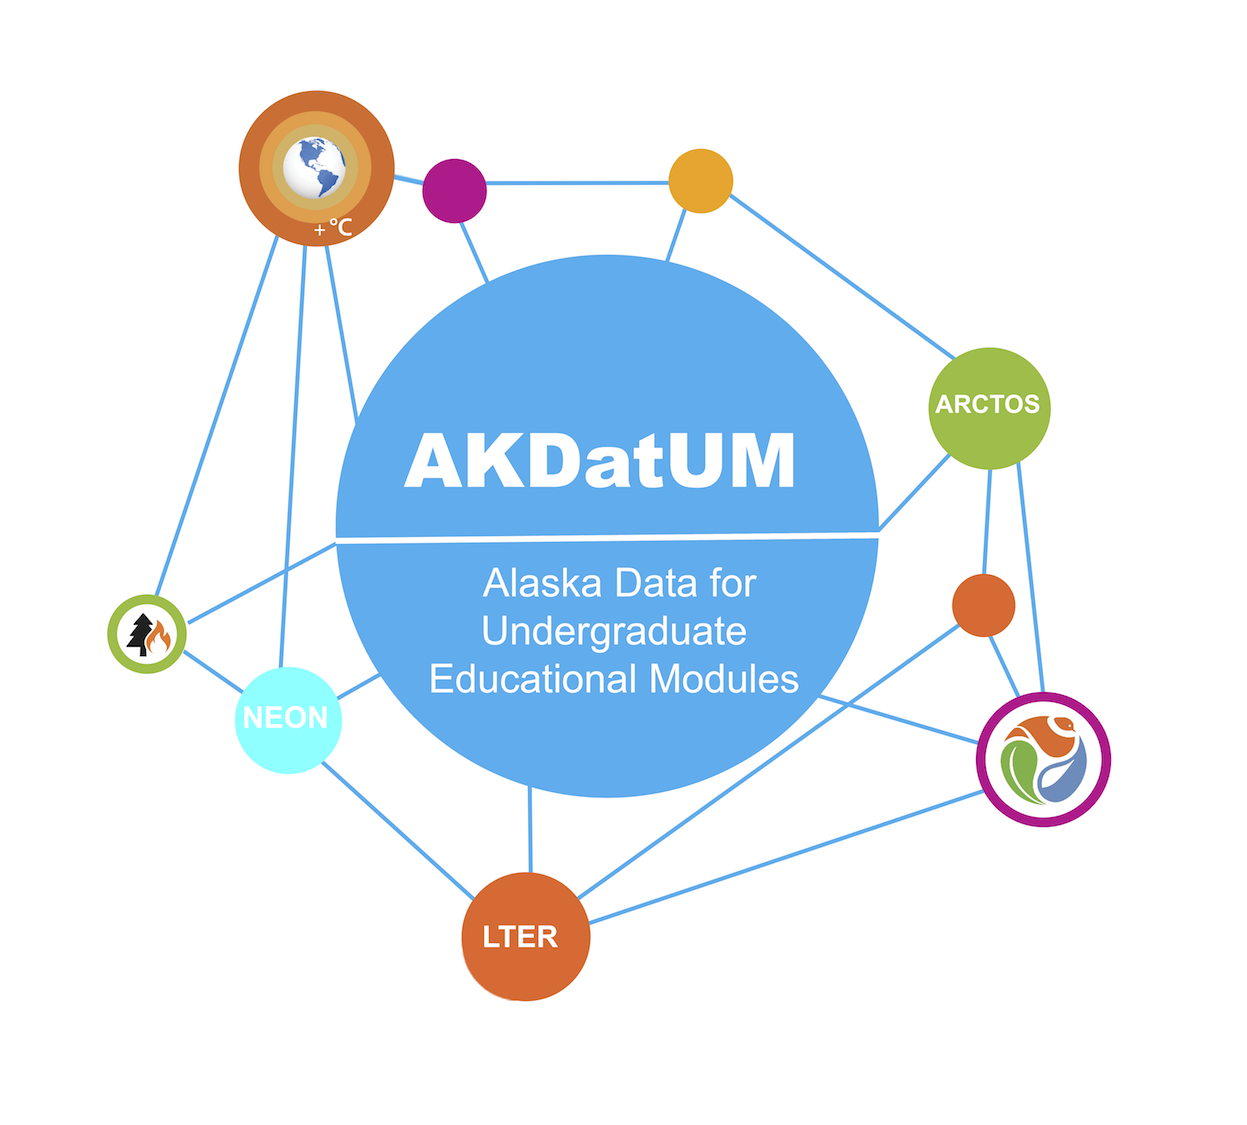 Alaska Data for Undergraduate Educational Modules (AKDatUM)